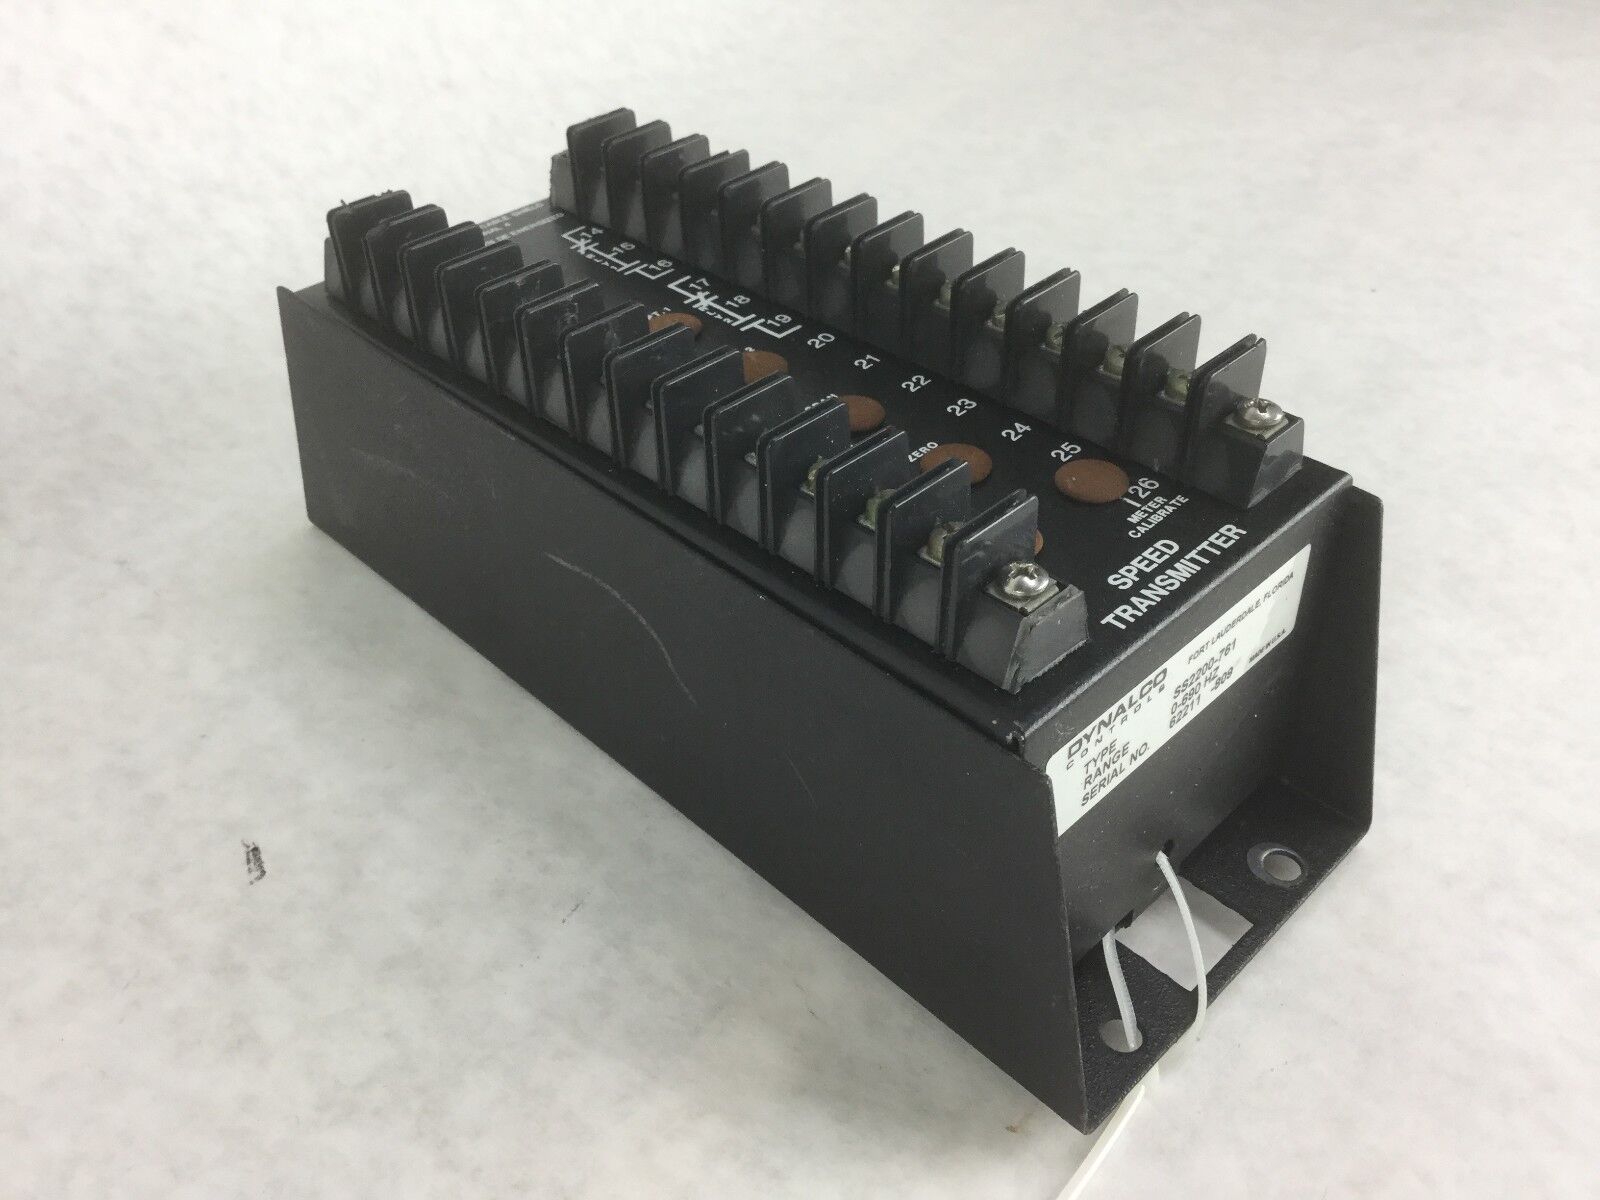 DYNALCO CONTROLS, Speed Transmitter SS2200-761 (Range 0-690 HZ)